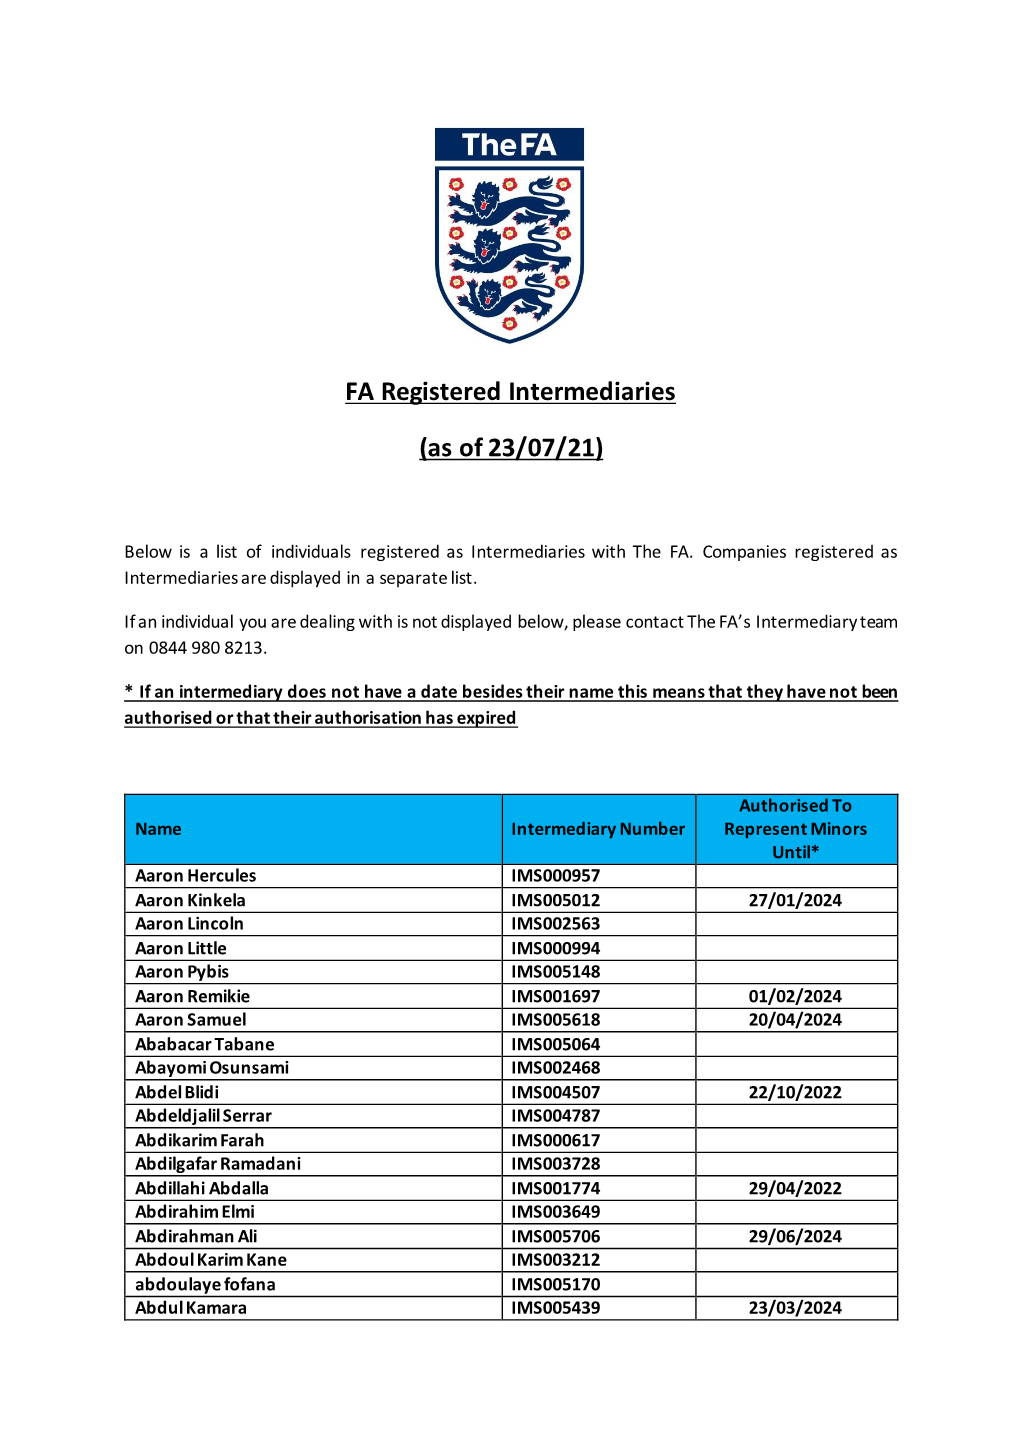 FA Registered Intermediaries (As of 23/07/21)